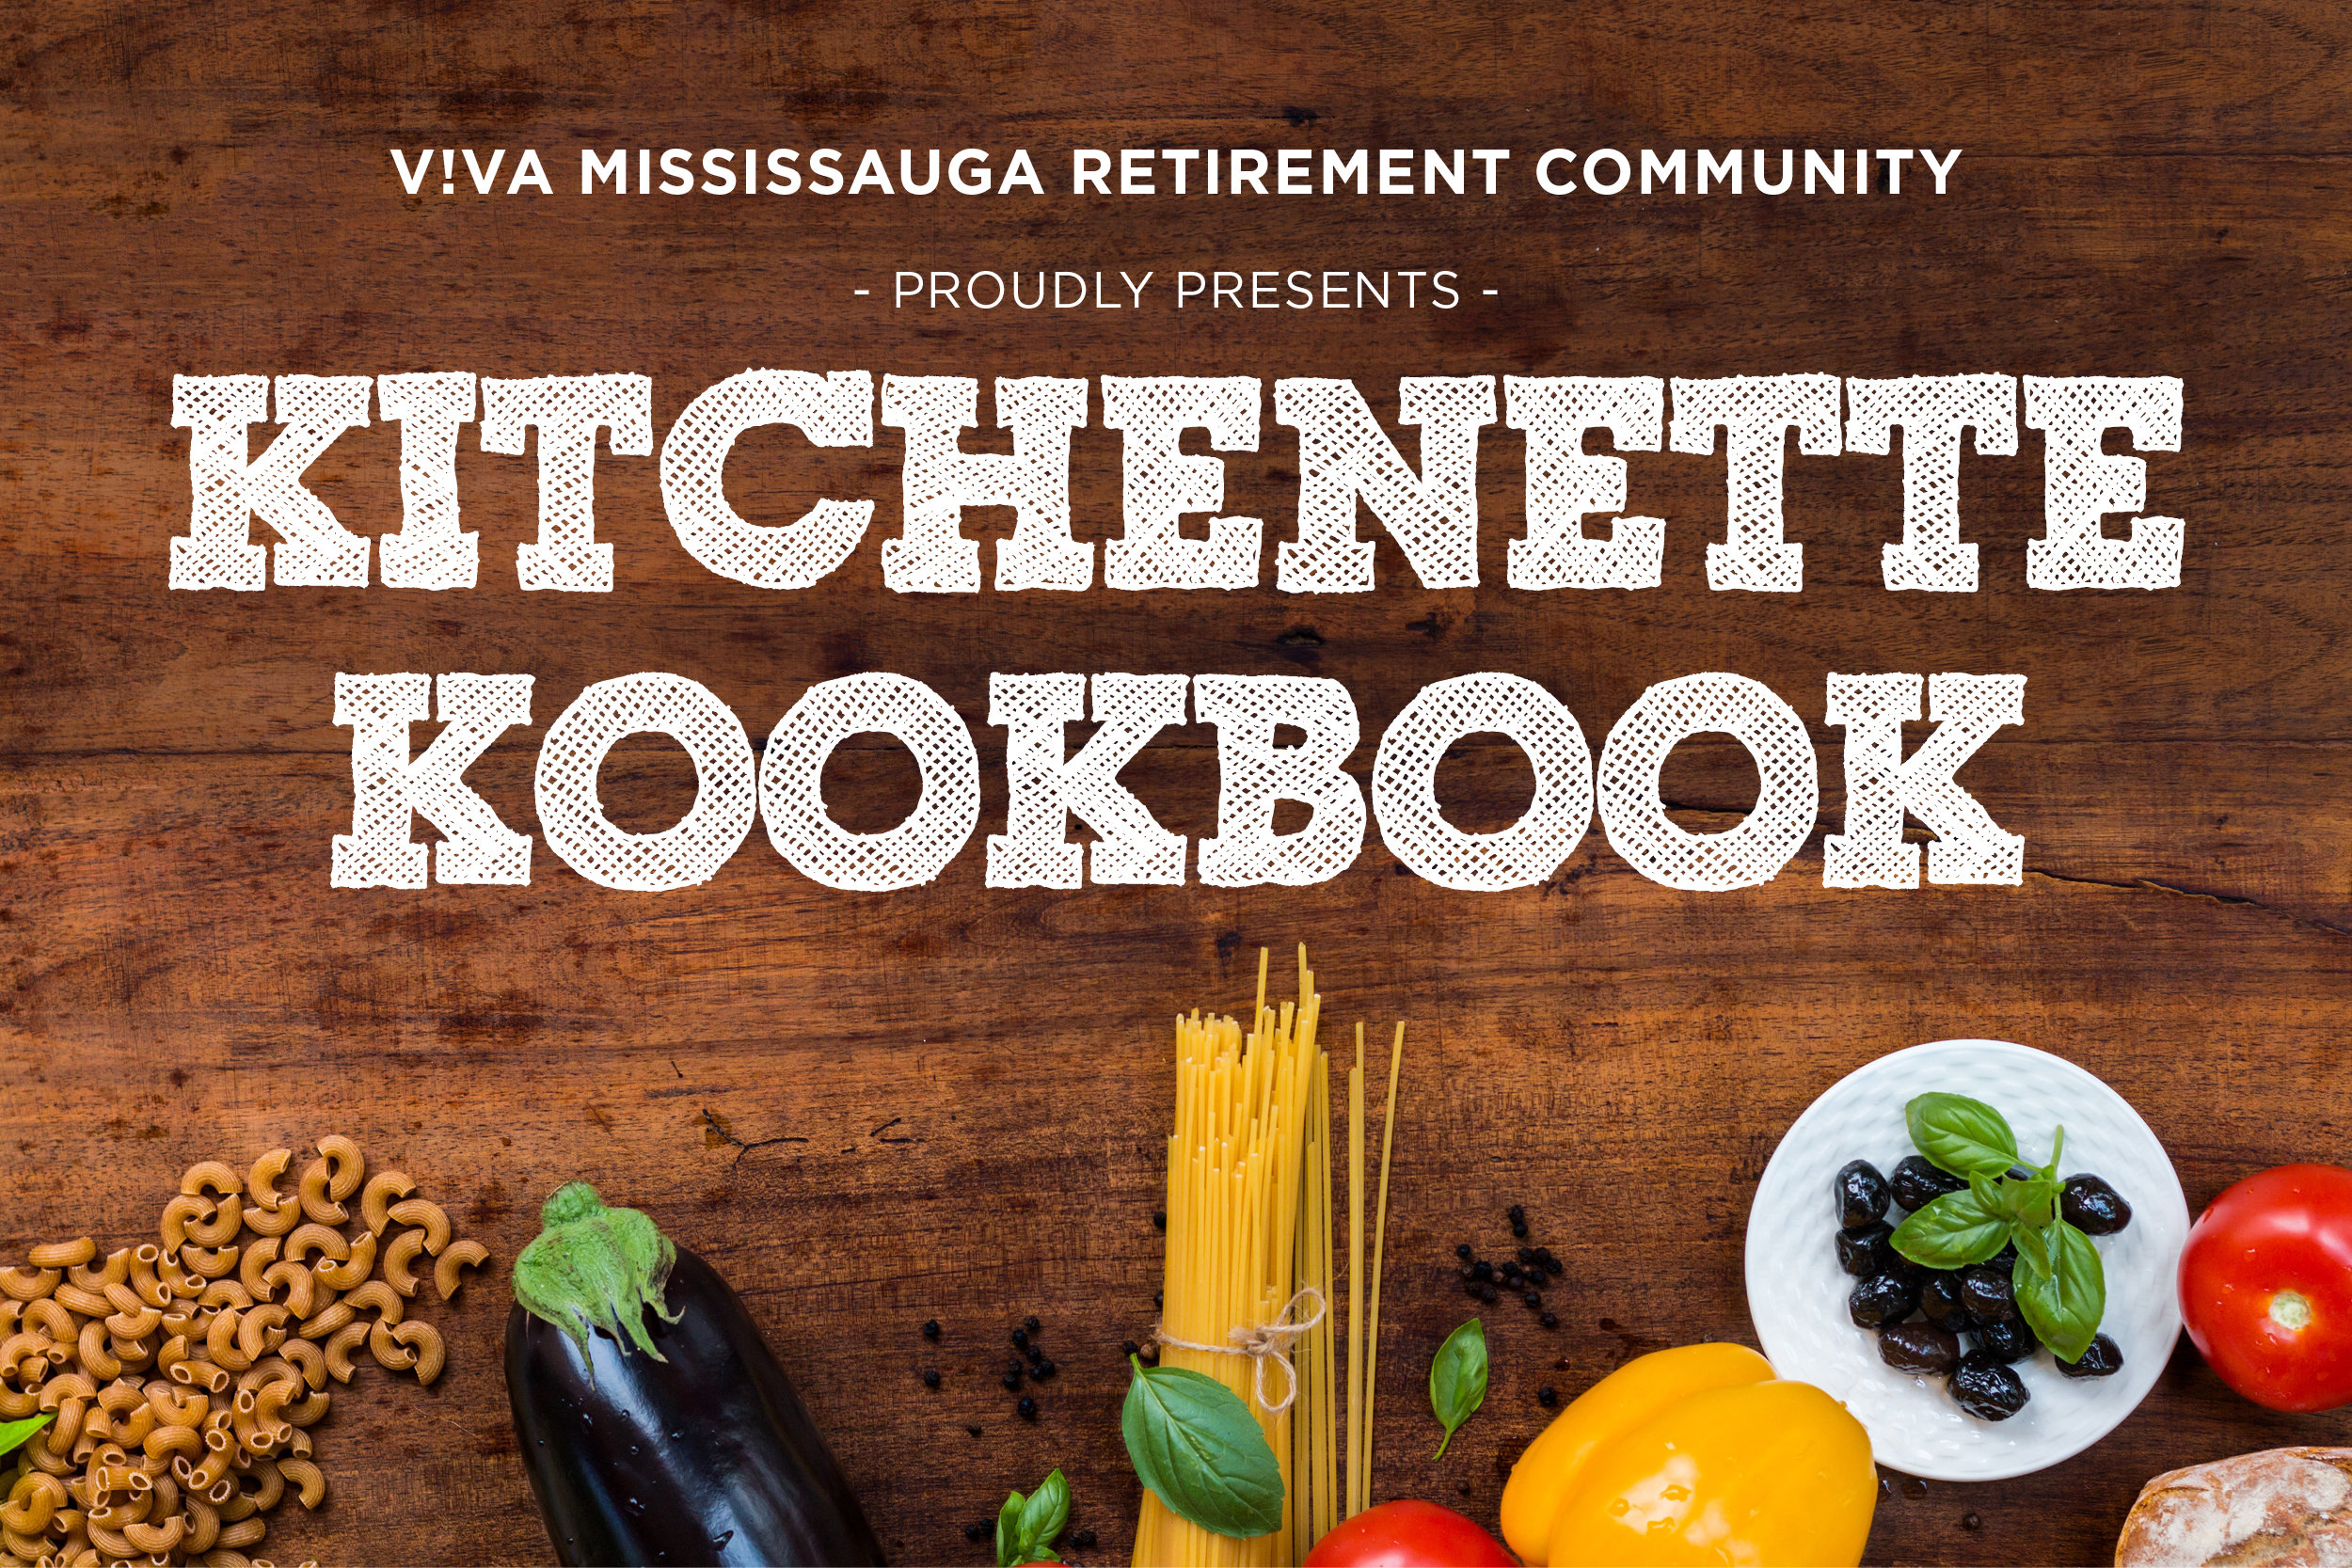 VIVA Kitchenette Kookbook image from VIVA email Nov. 30, 2017